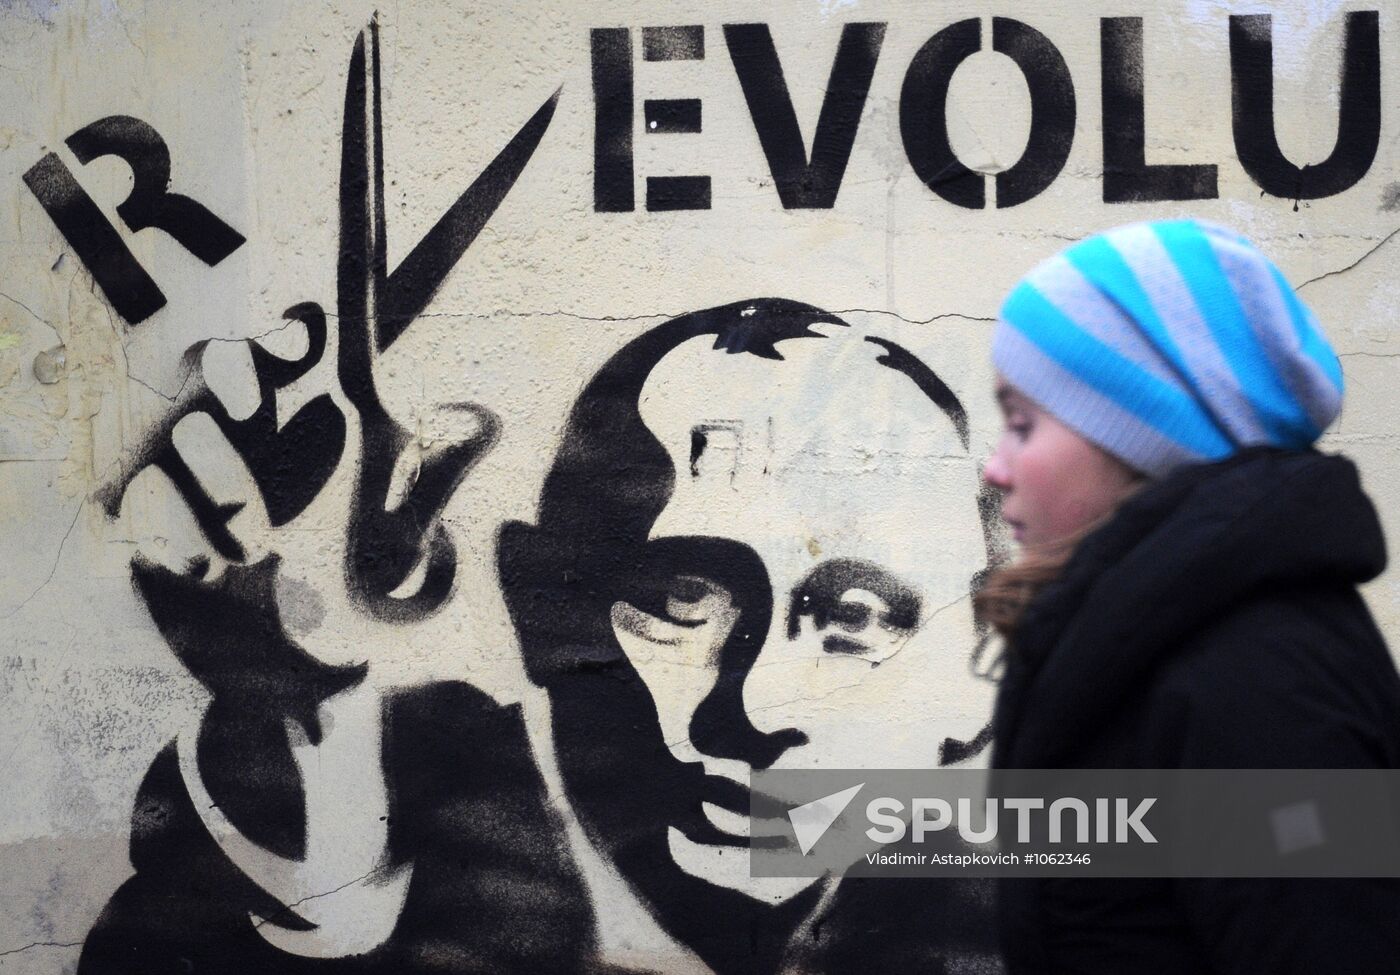 Graffiti depicting Vladimir Putin, Moscow